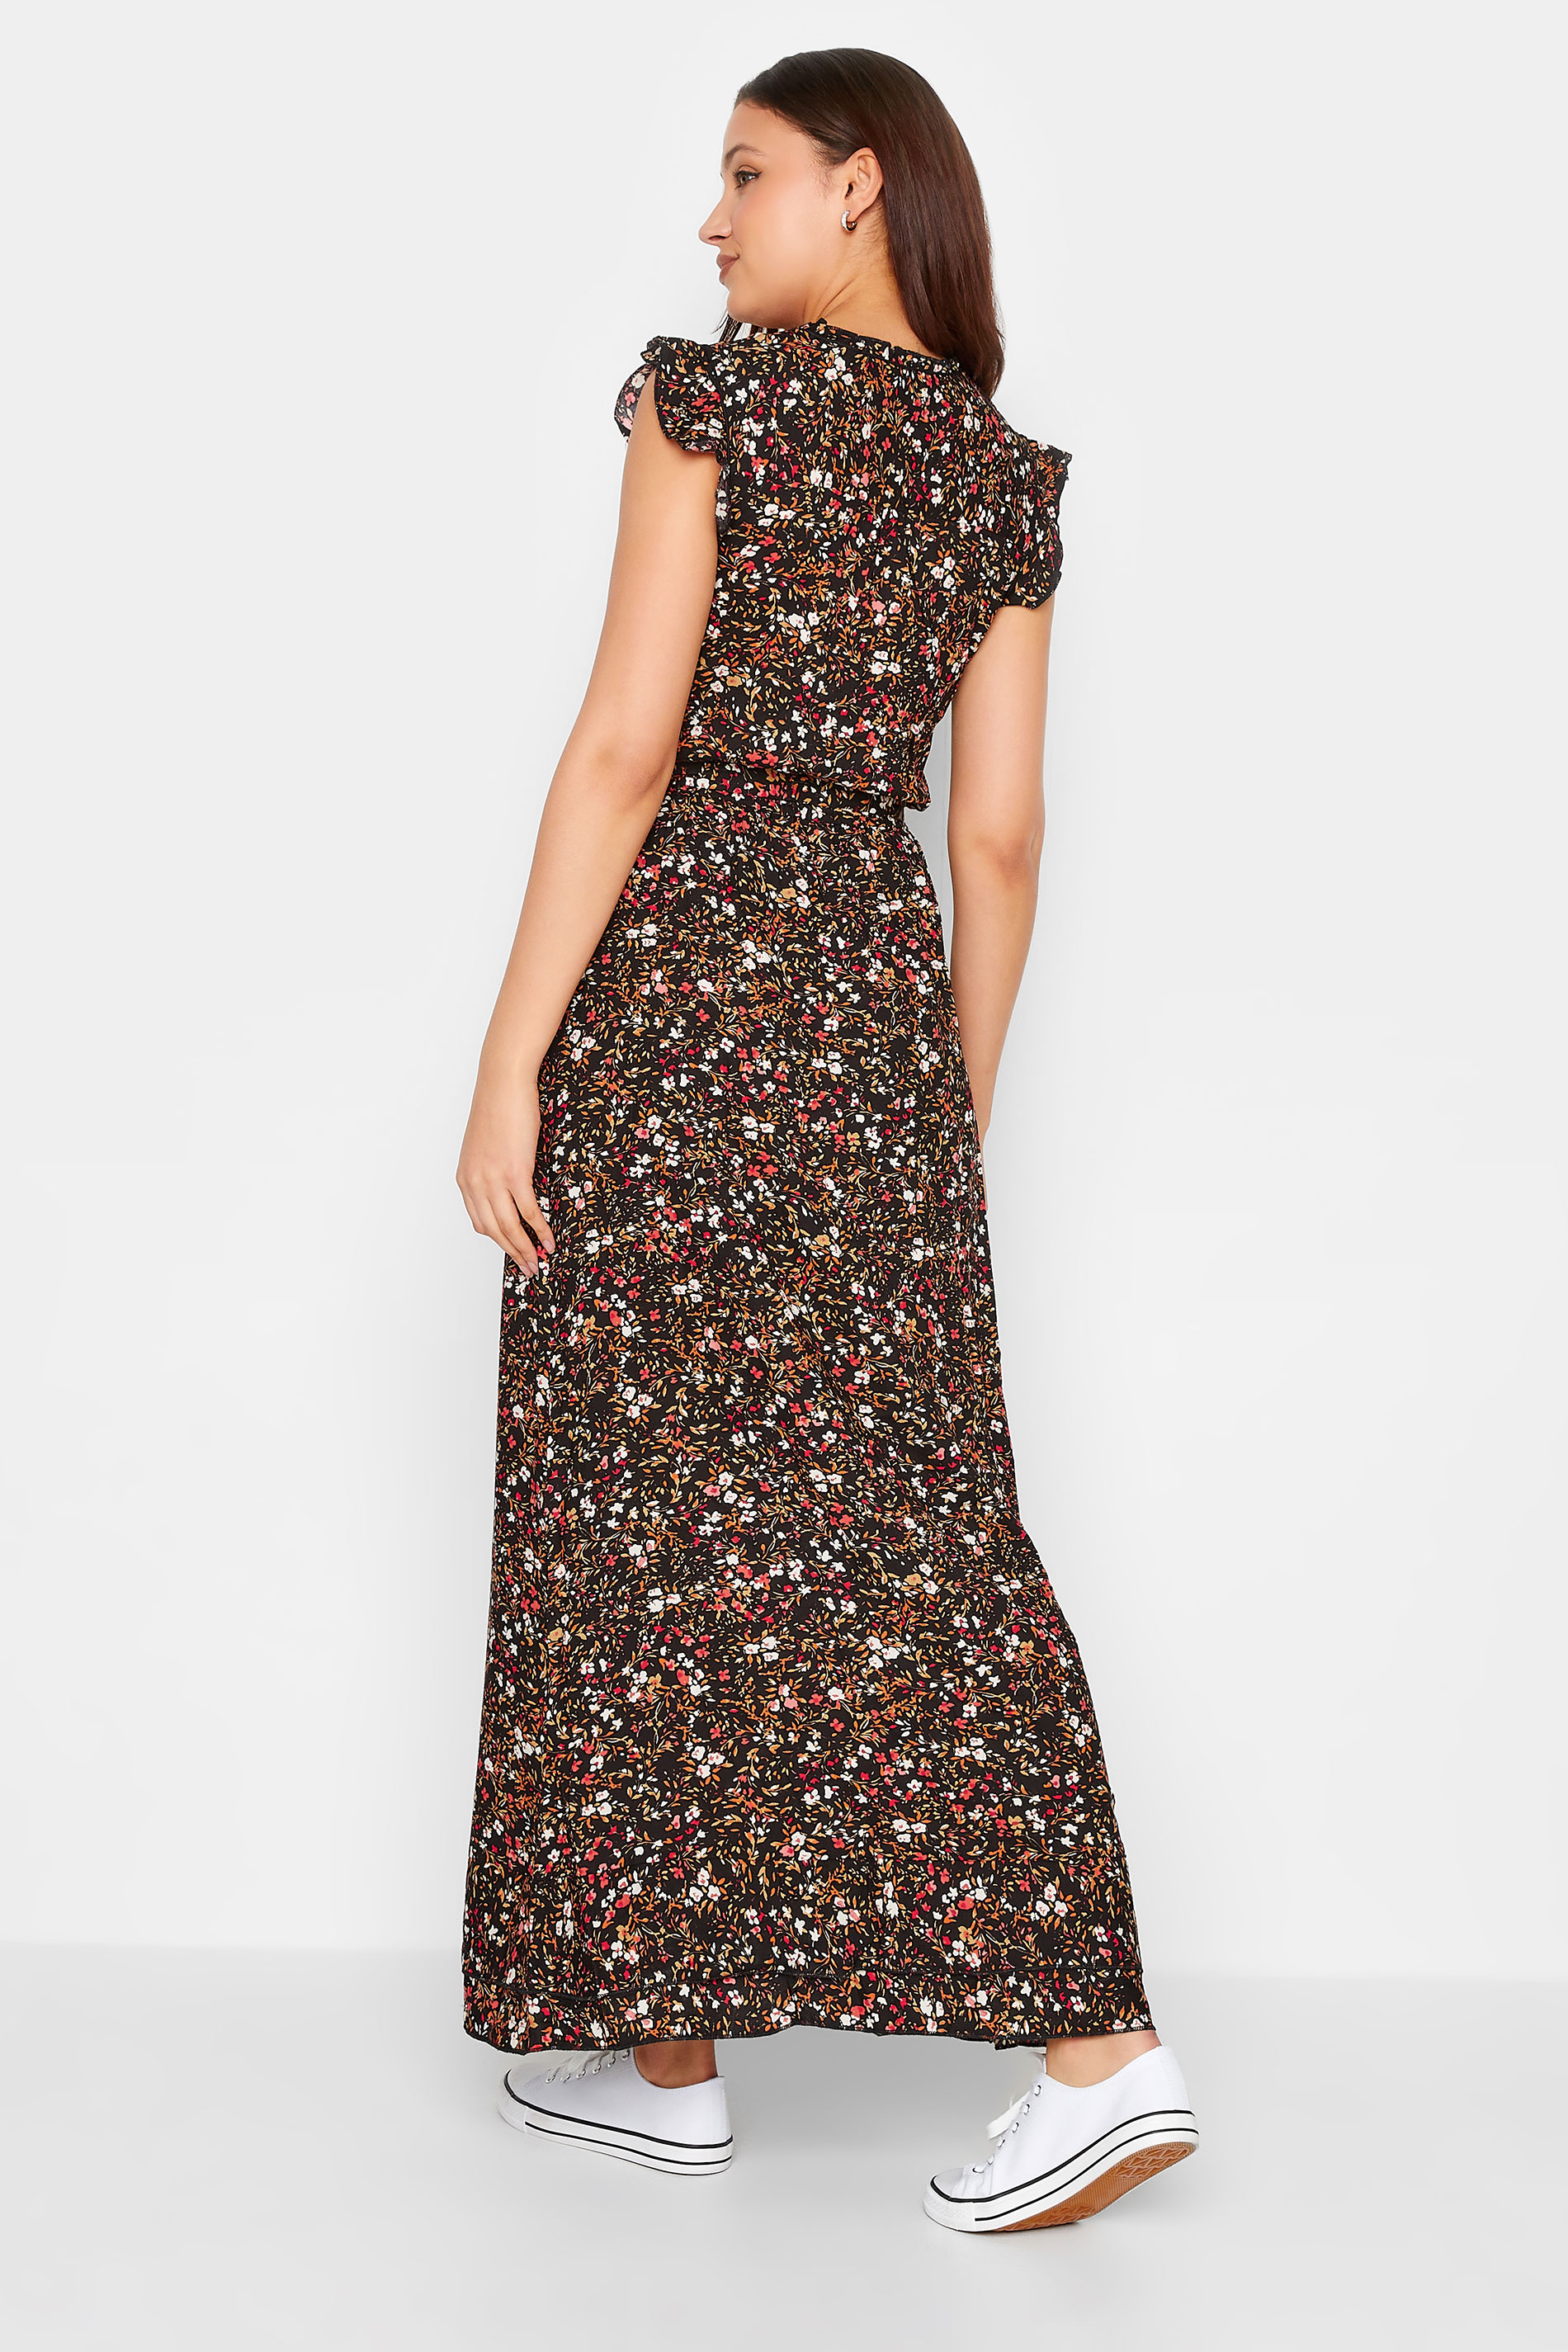 Tall Women's LTS Black Ditsy Floral Maxi Dress | Long Tall Sally 3